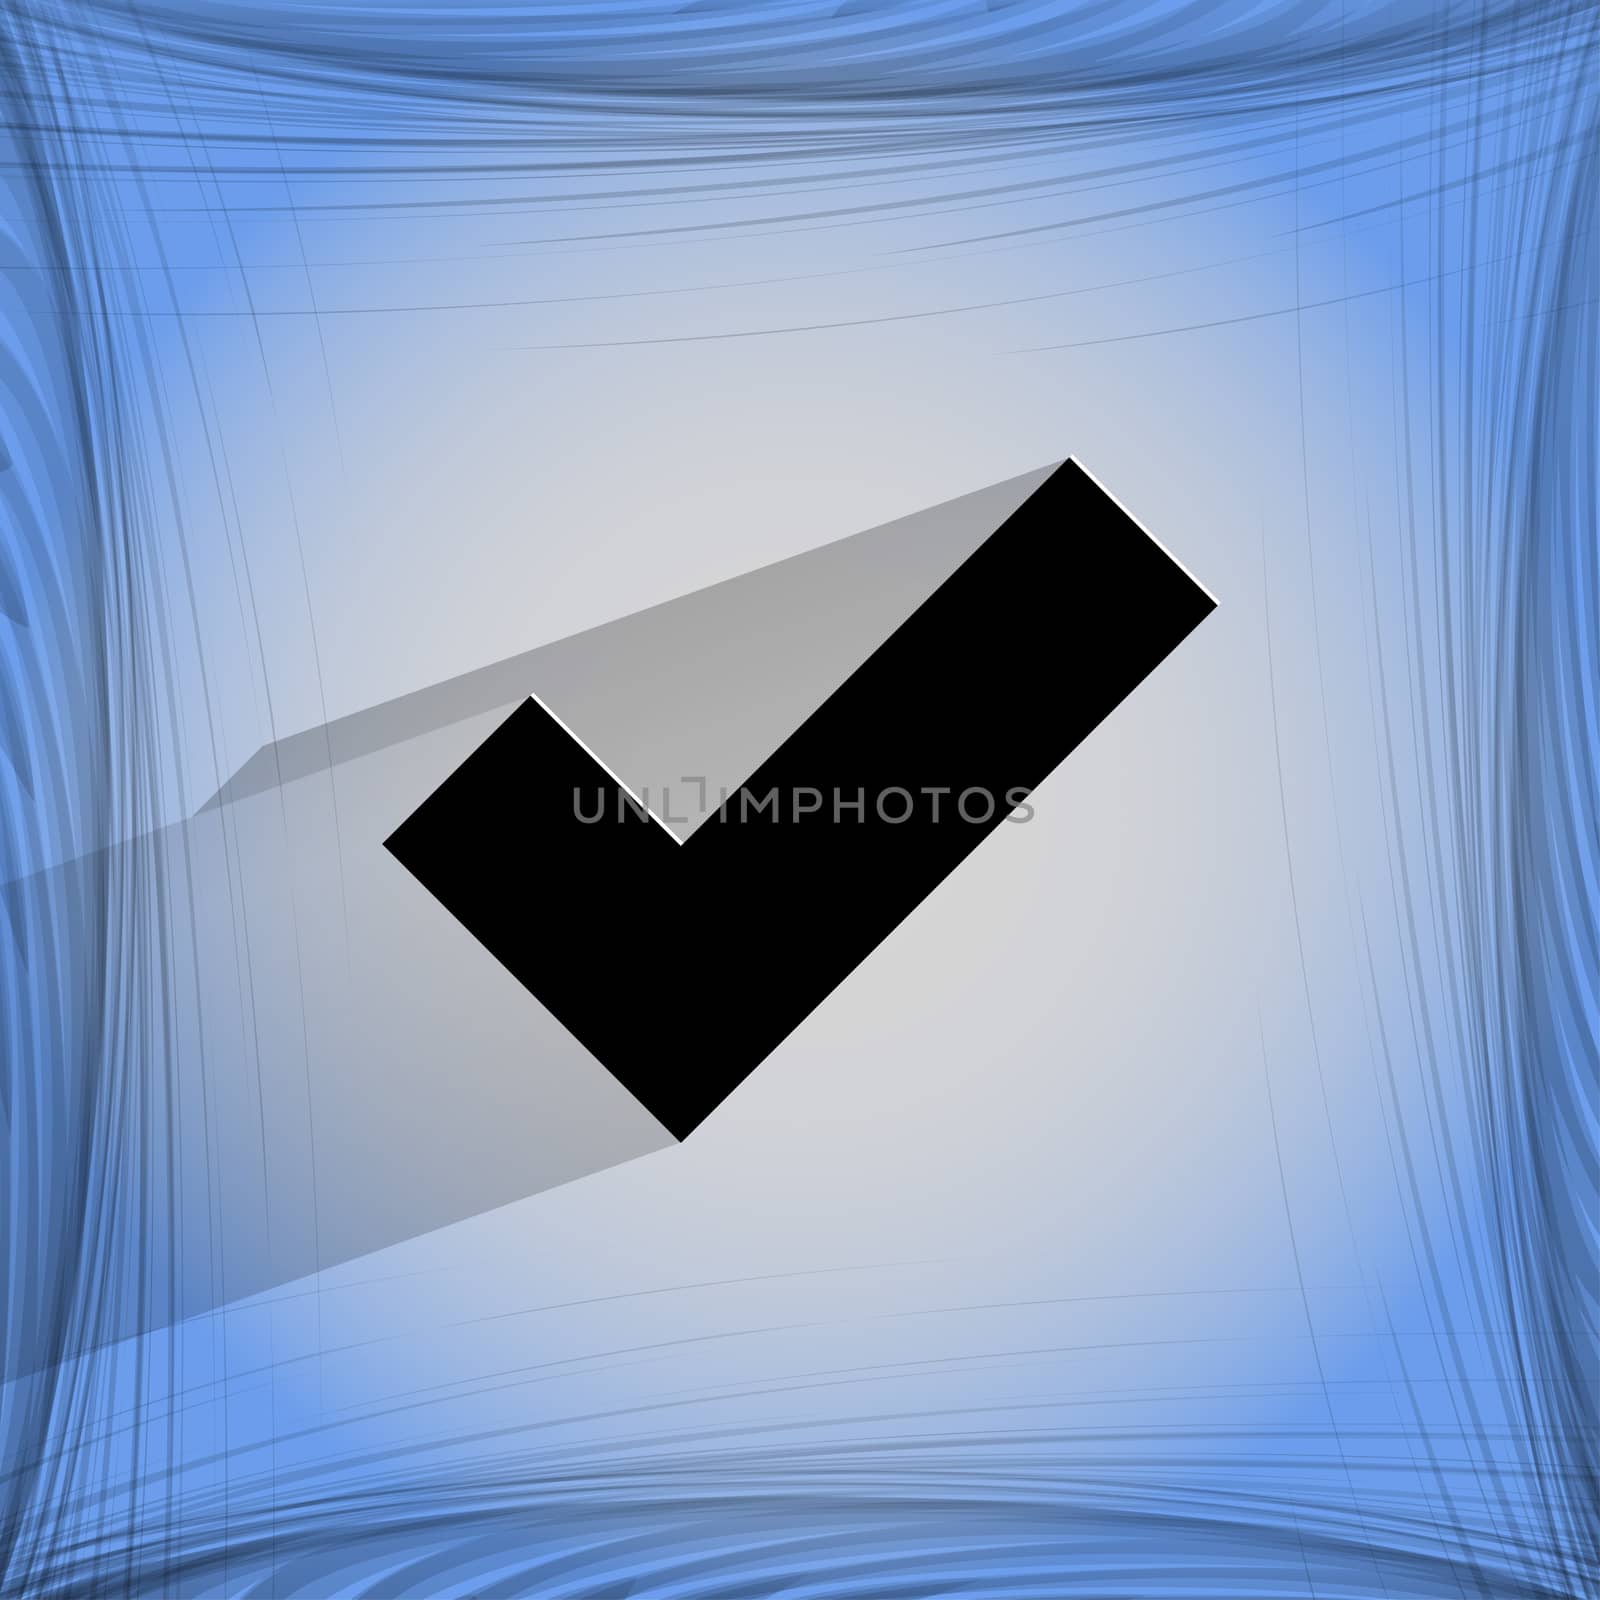 tick .Flat modern web design on a flat geometric abstract background . 